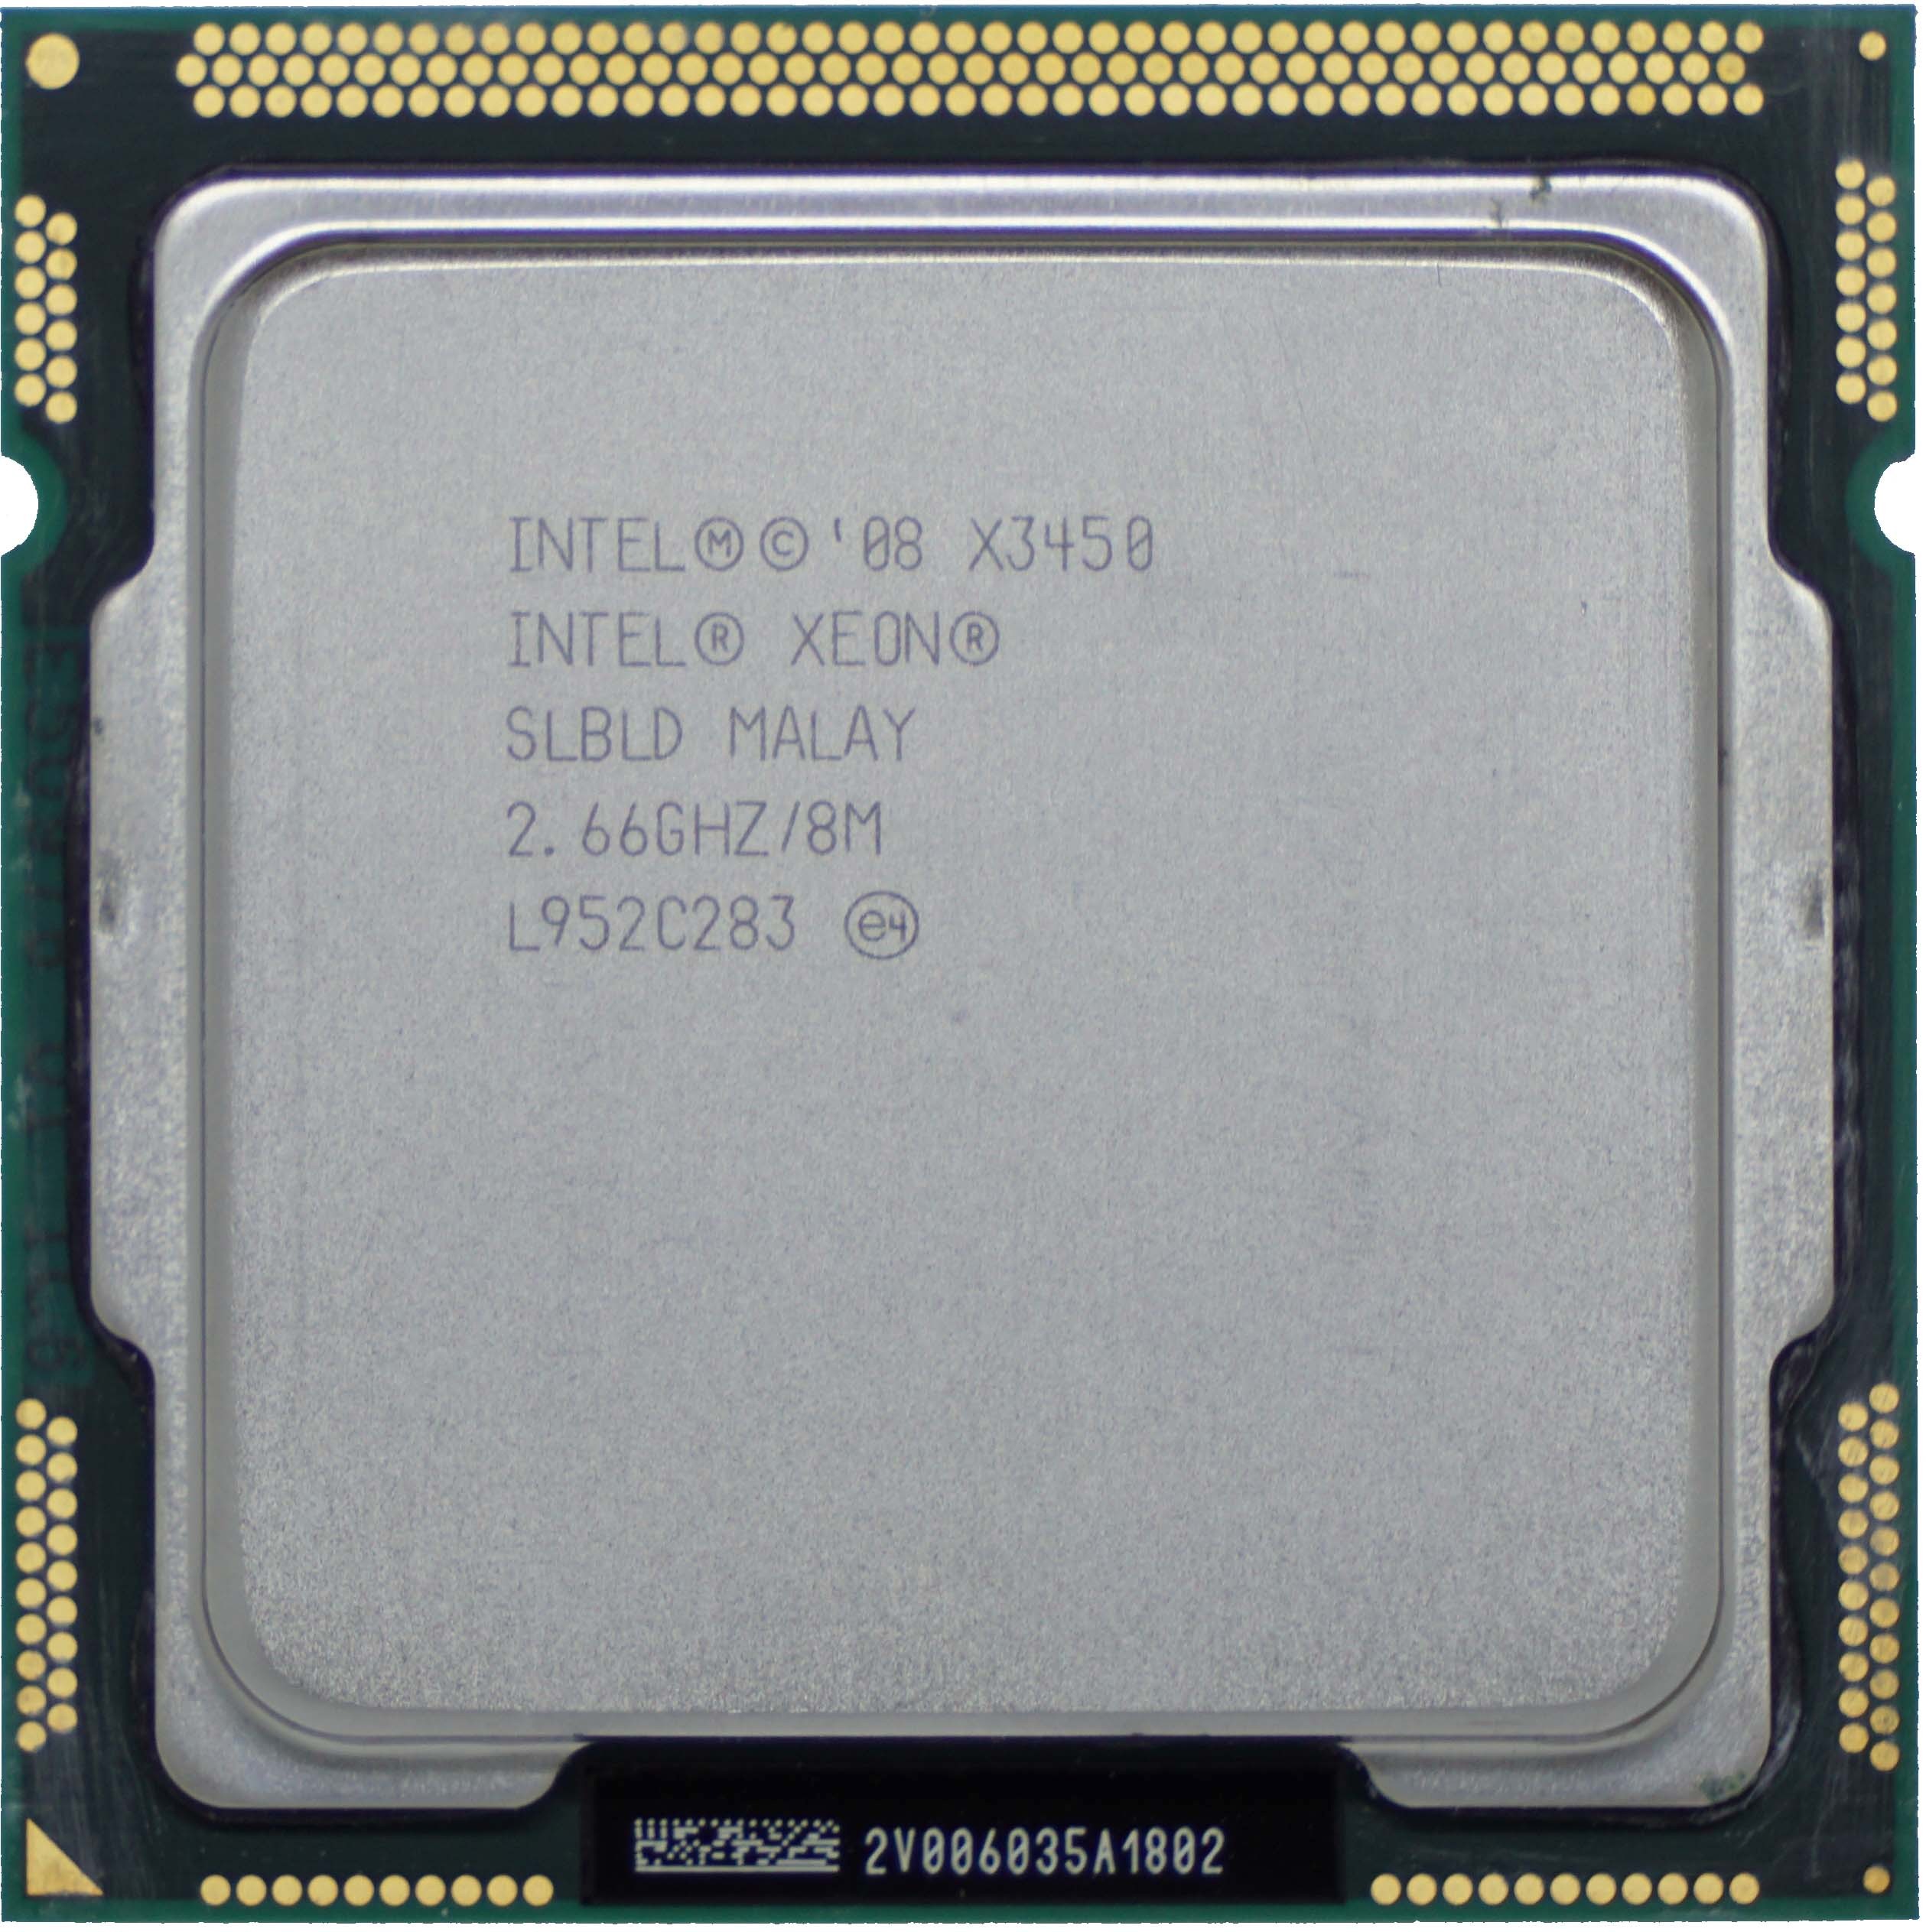 Intel Xeon X3450 (SLBLD) 2.66Ghz Quad (4) Core LGA1156 97W CPU